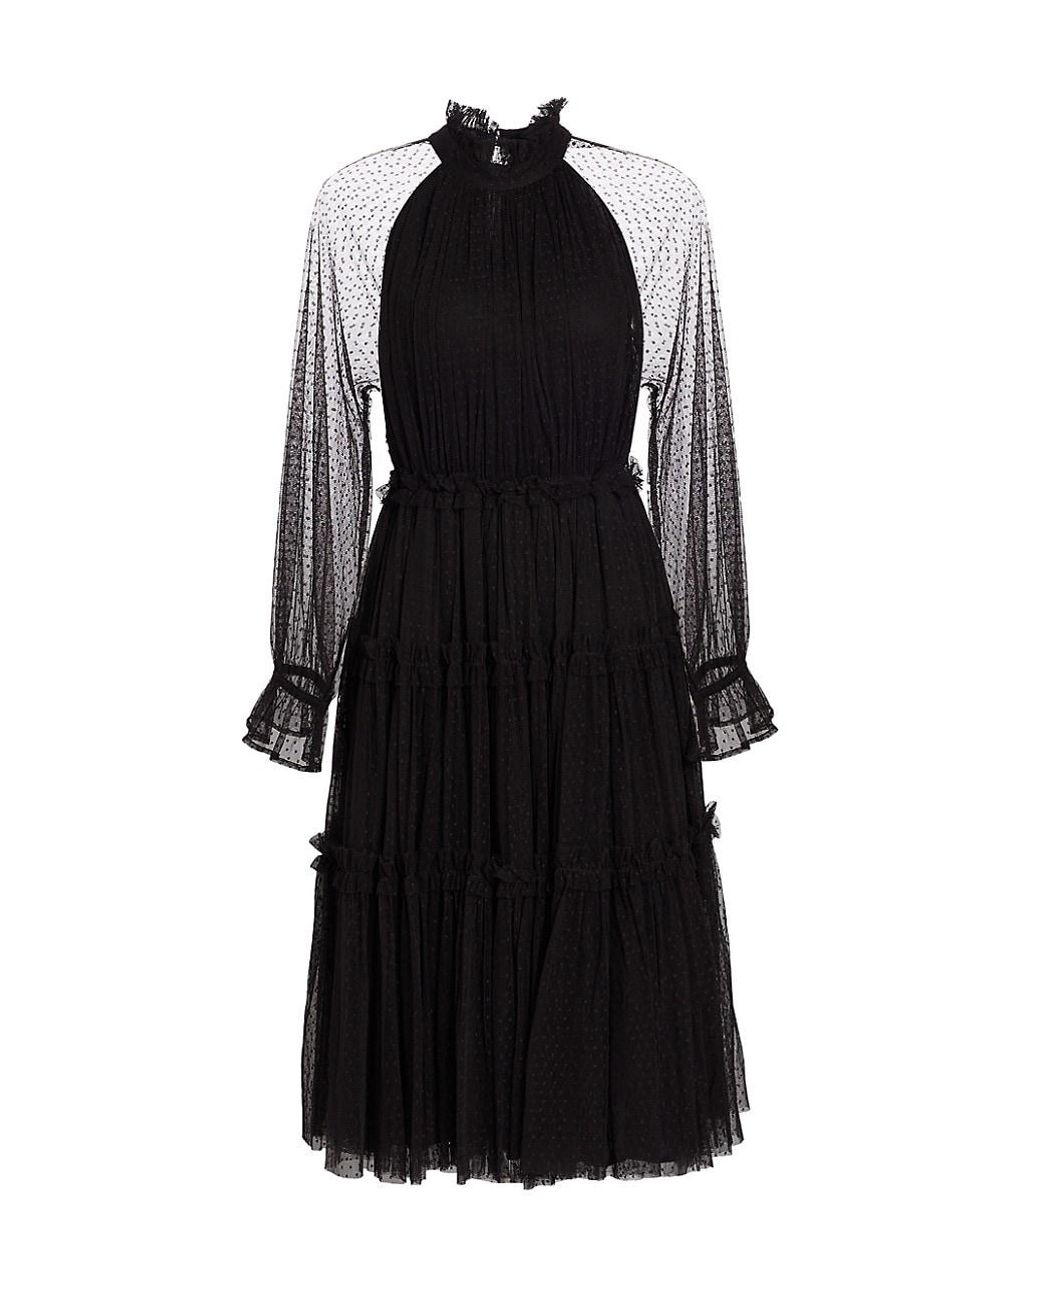 MILLE Synthetic Gabrielle Swiss Dot Fit & Flare Dress in Black | Lyst